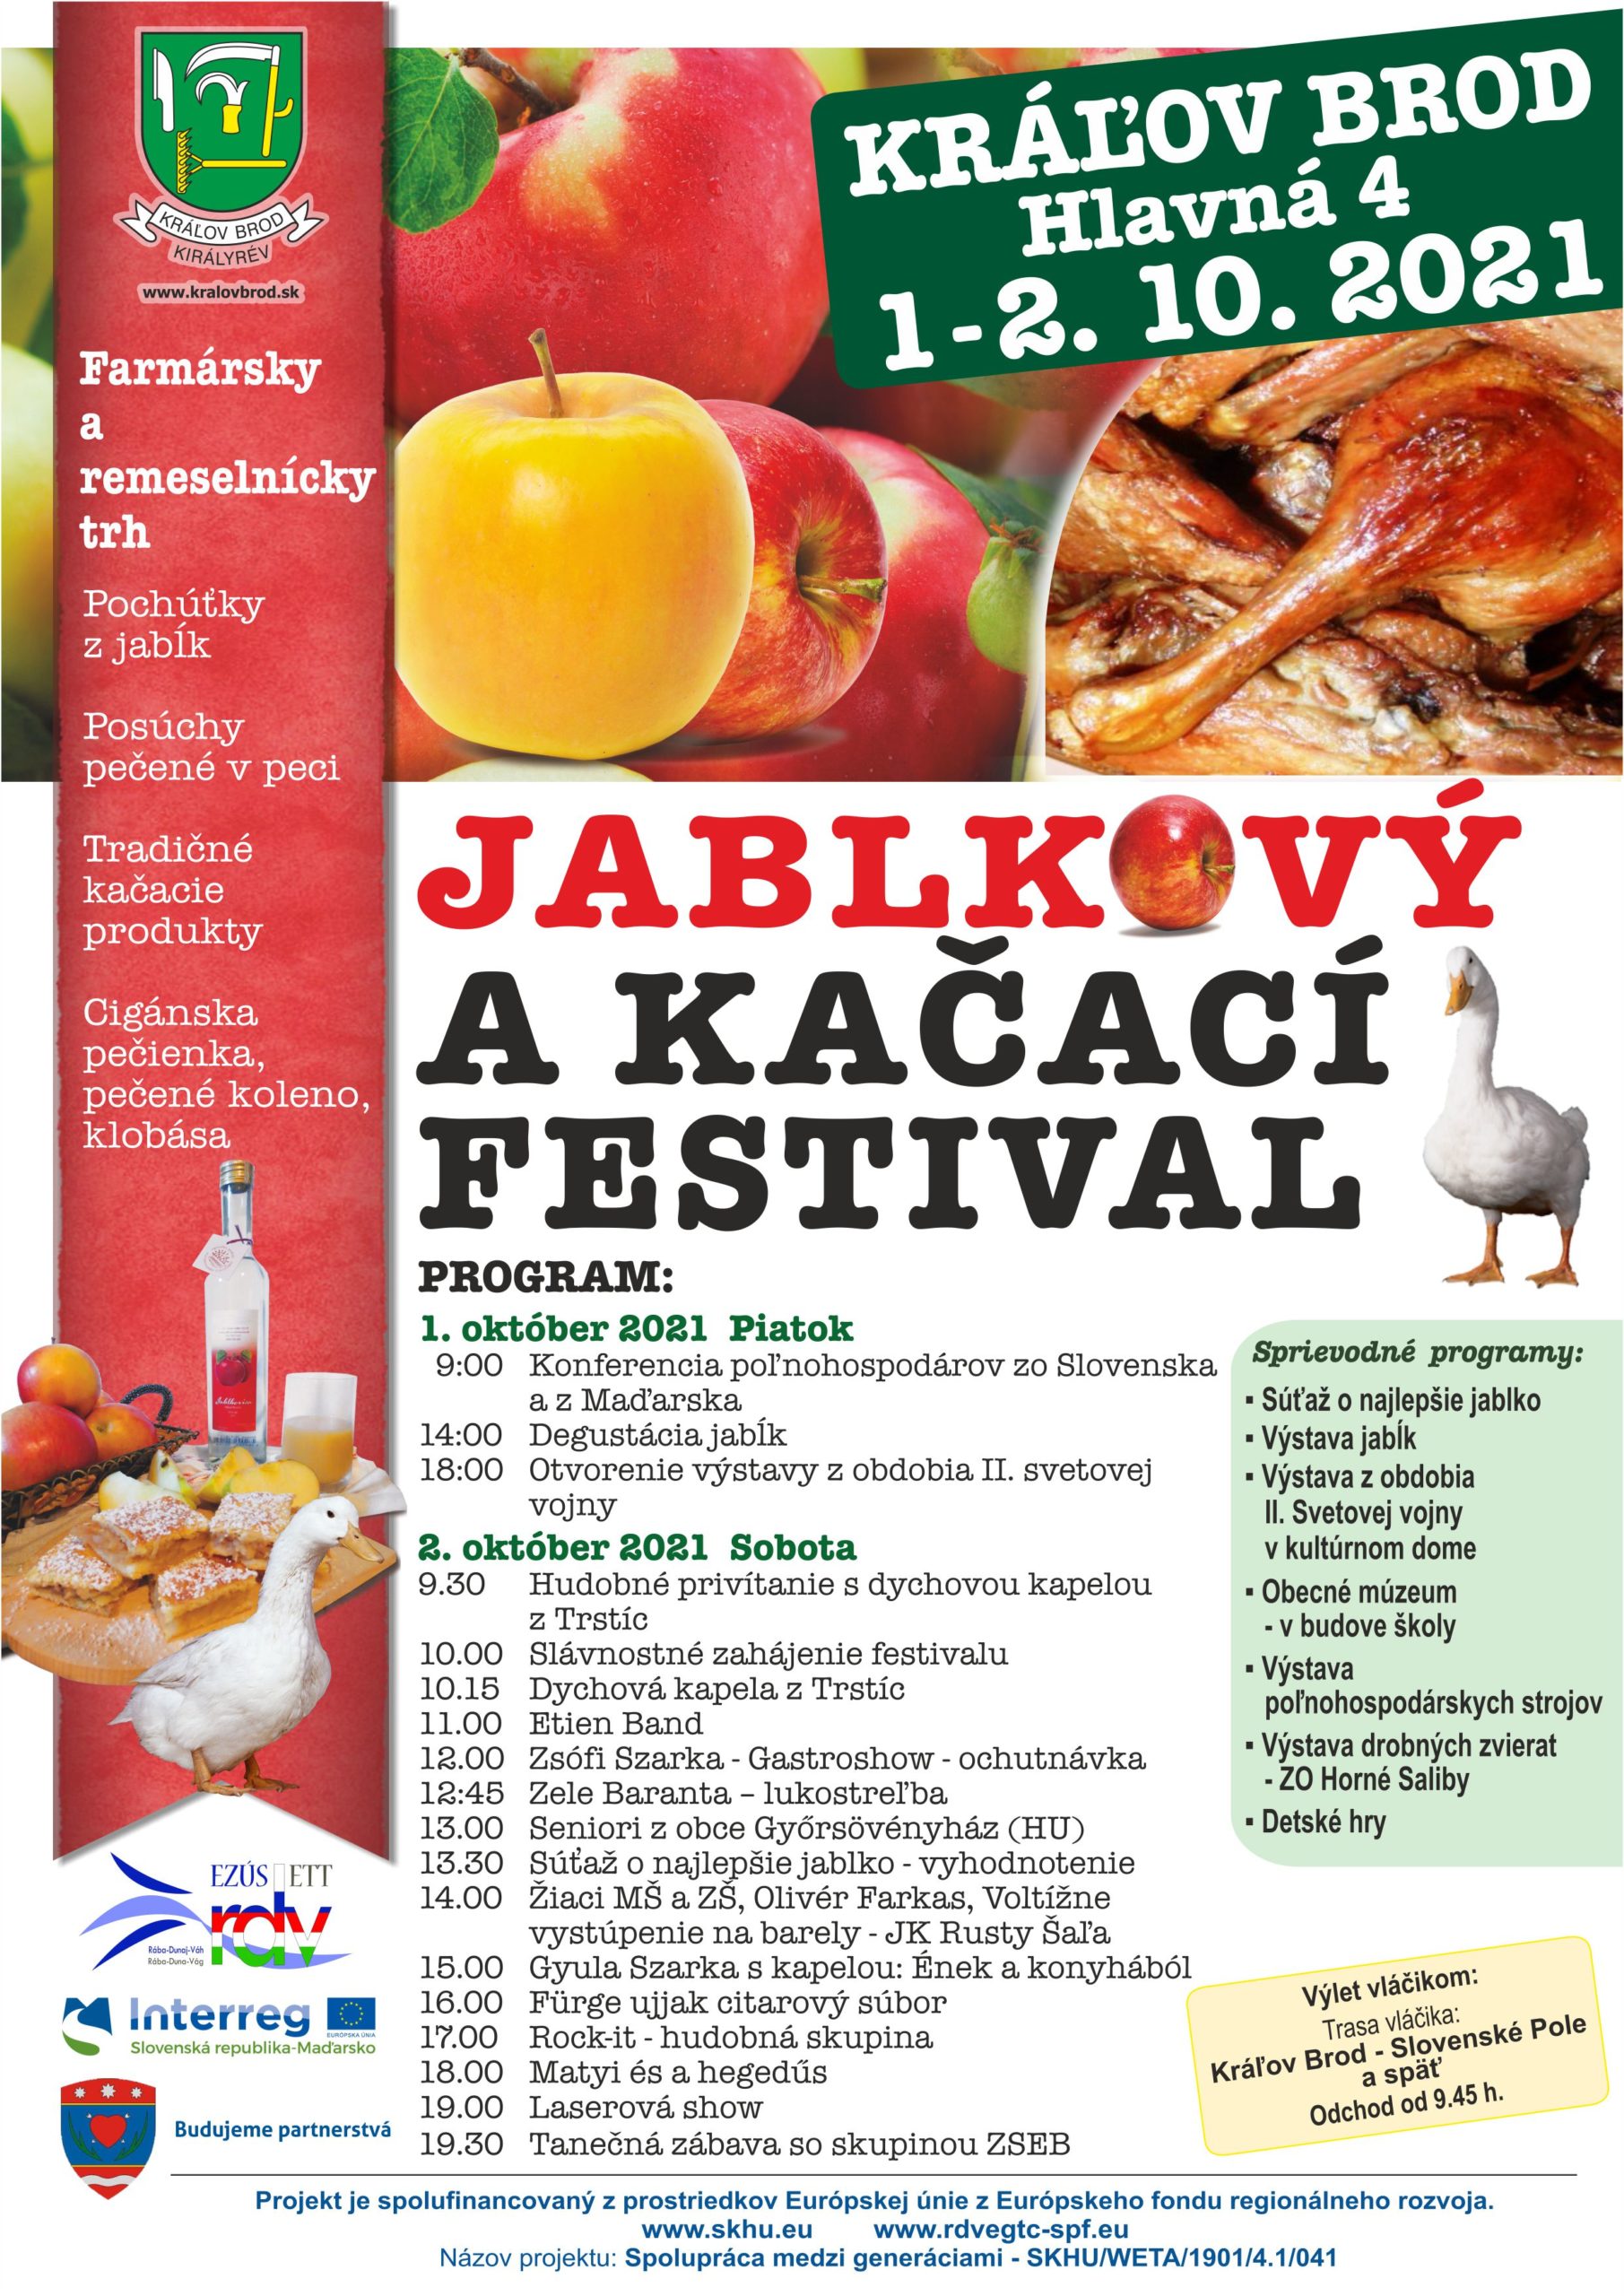 NOVÉ - - - Jablkový a kačací festival 2021 Kráľov Brod